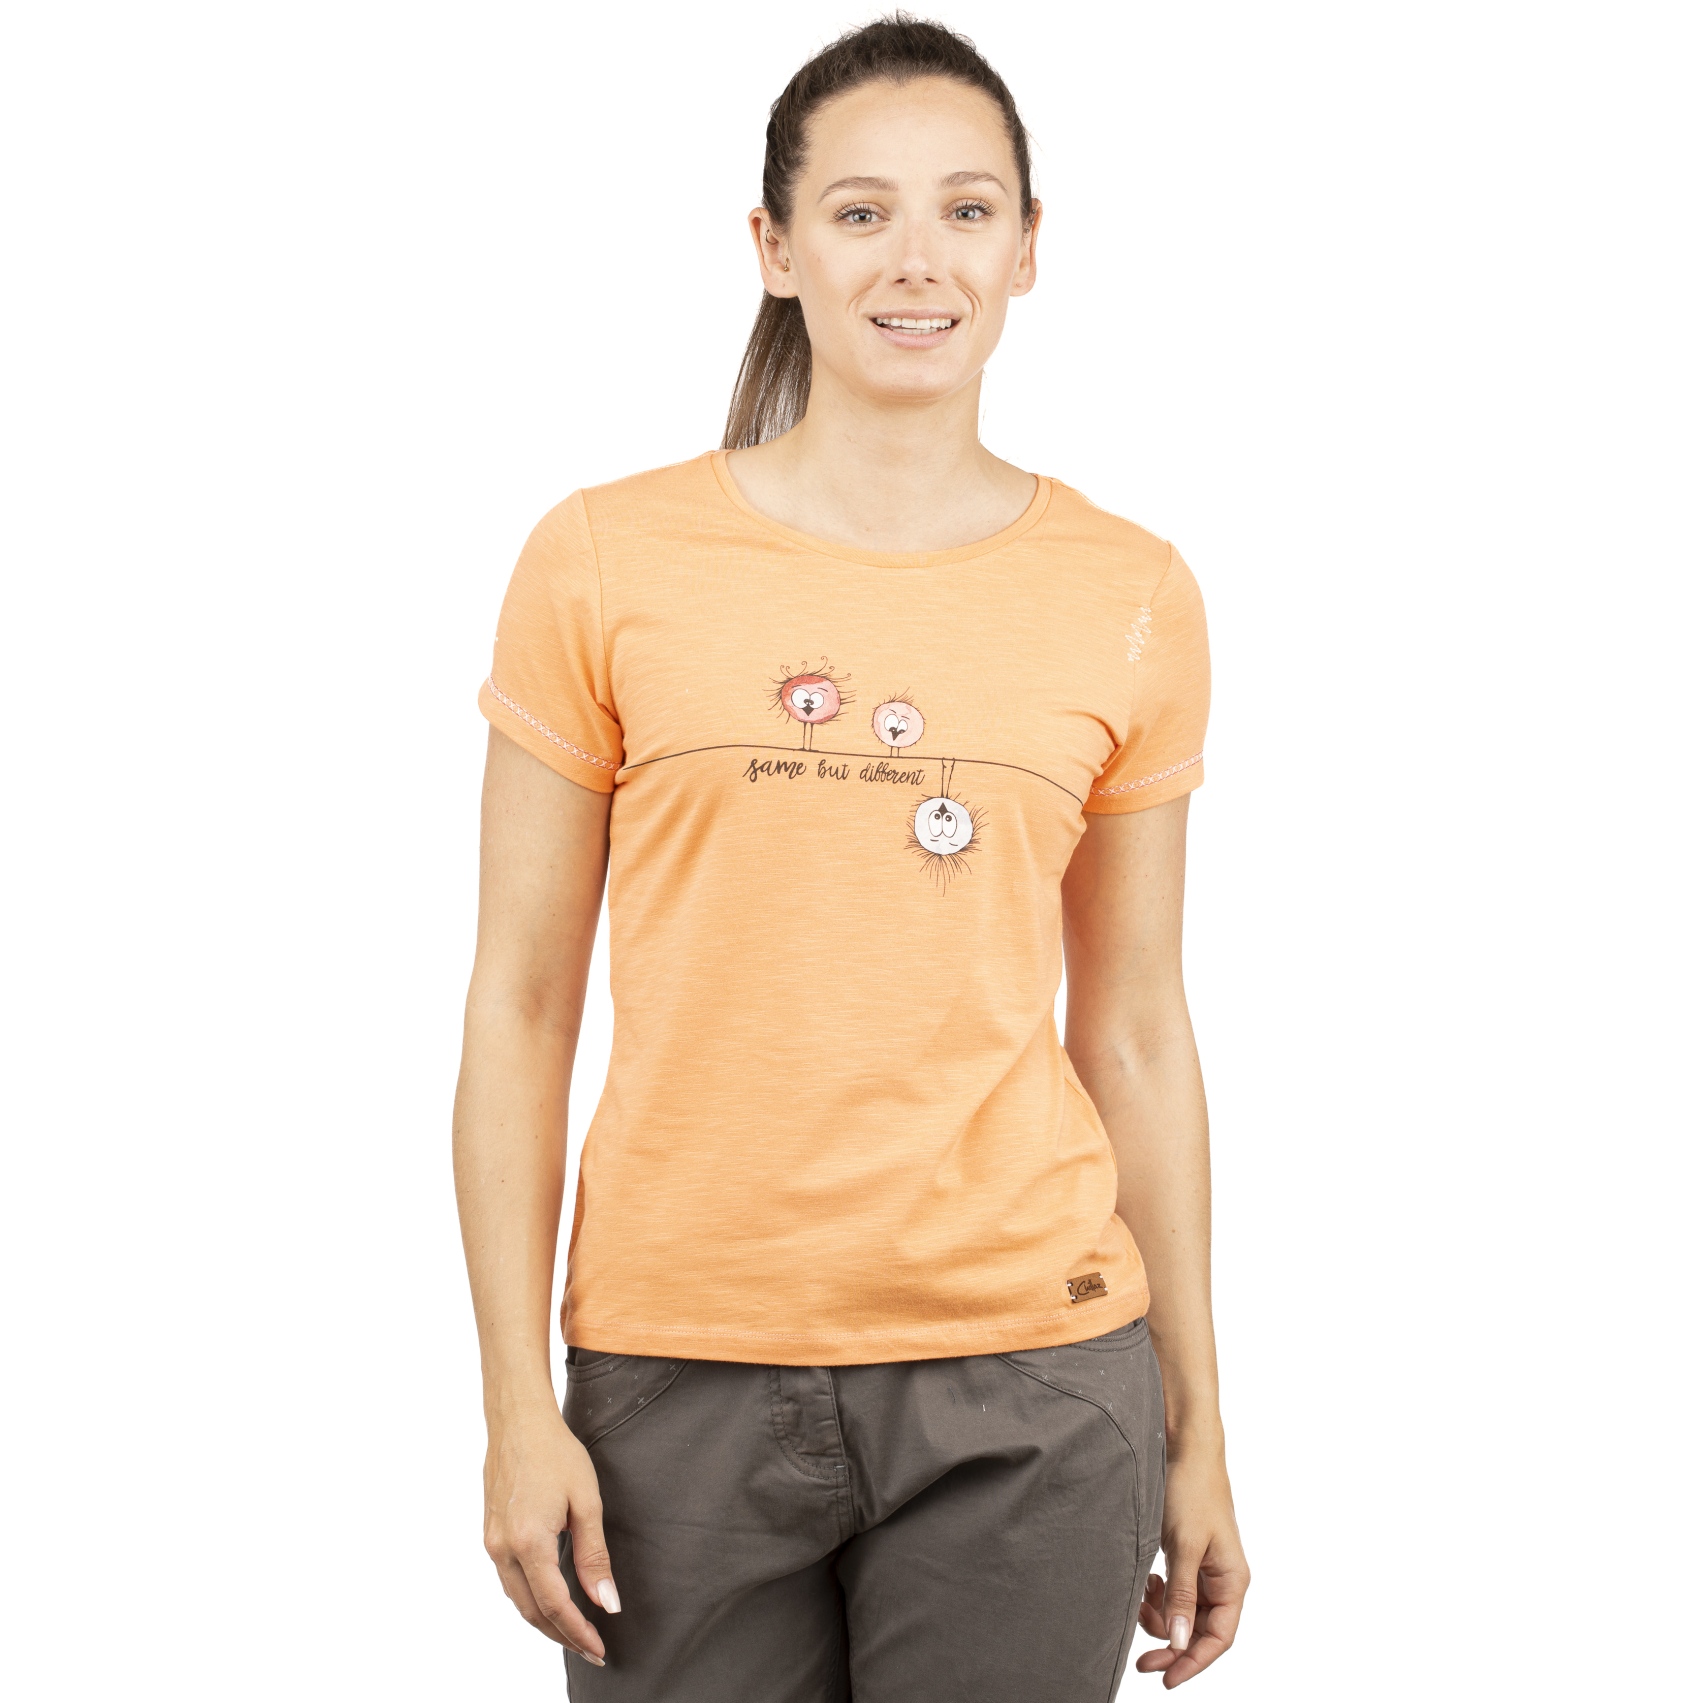 Productfoto van Chillaz Gandia Same But Different T-Shirt Dame - coral